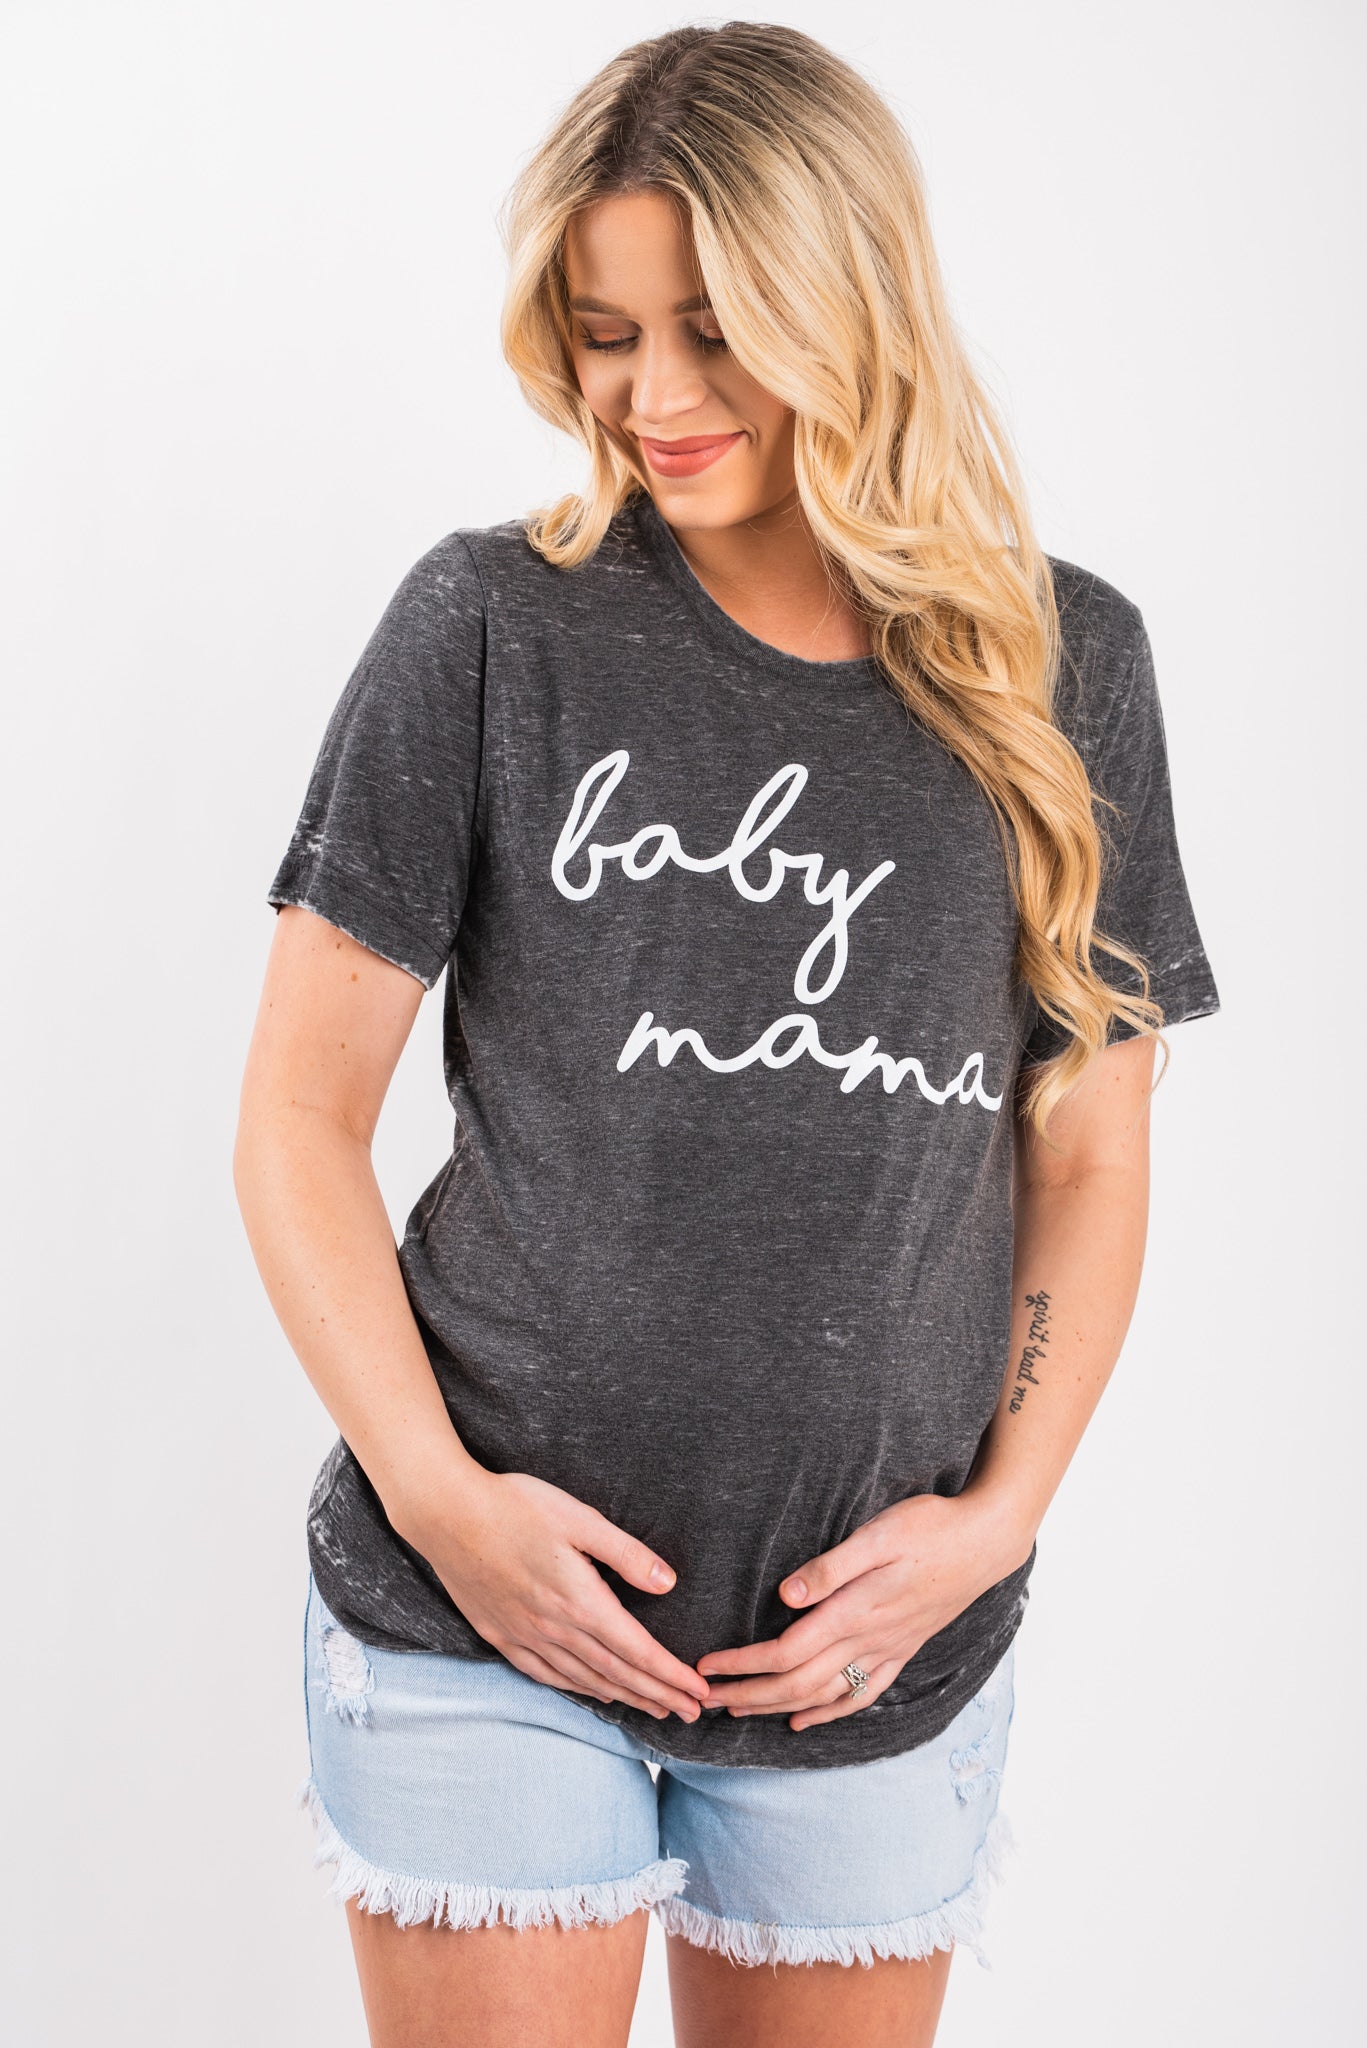 Baby Mama script unisex short sleeve t-shirt acid wash grey - Cute T-shirts - Funny T-Shirts at Lush Fashion Lounge Boutique in Oklahoma City